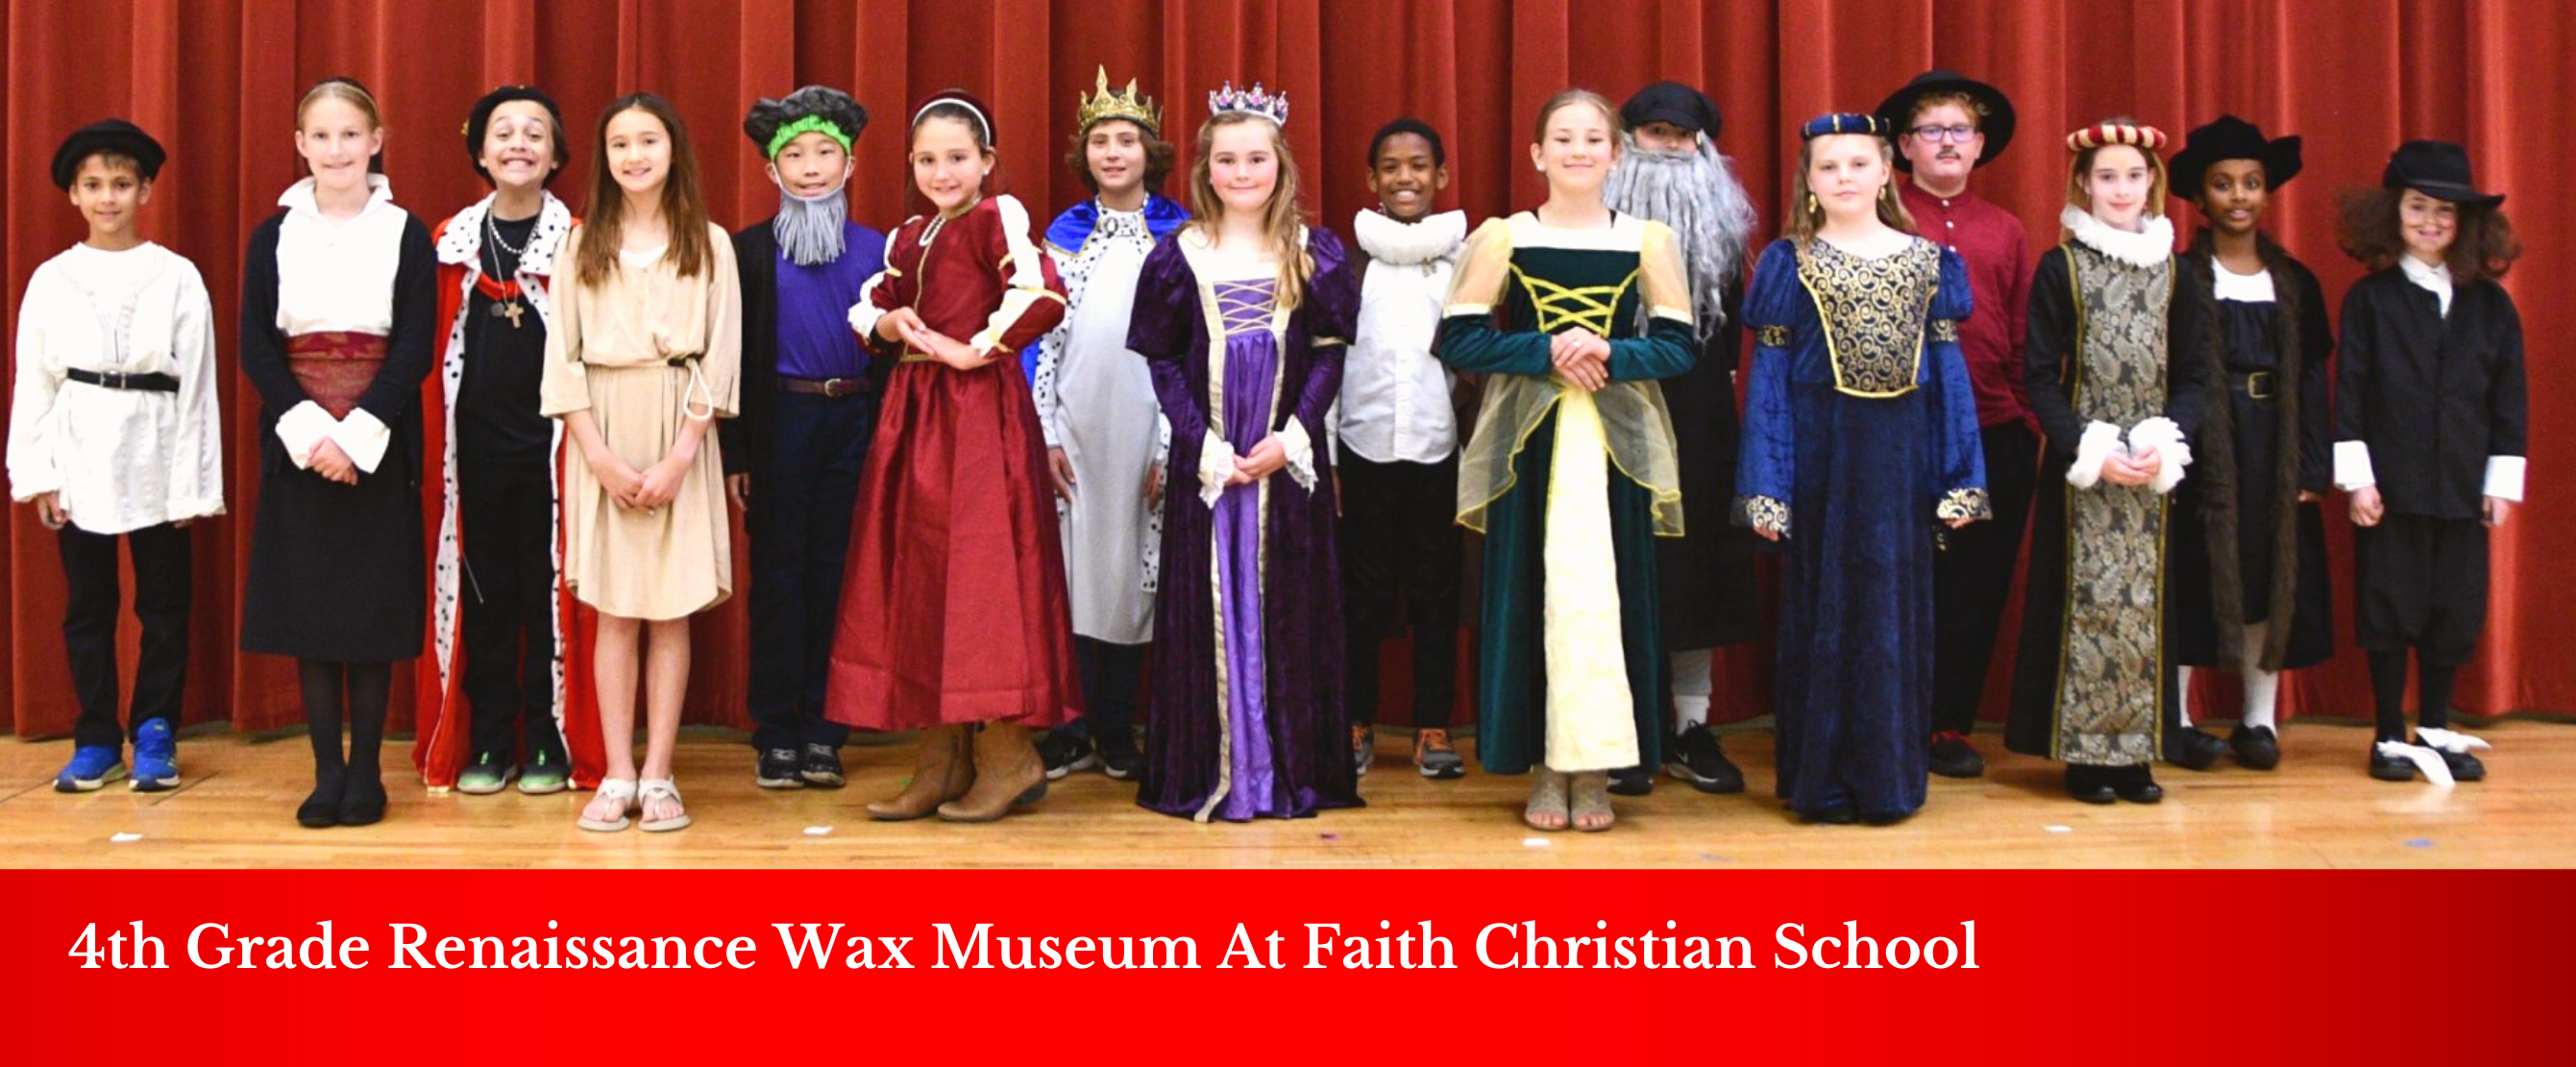 4th Grade Renaissance Wax Museum At Faith Christian School